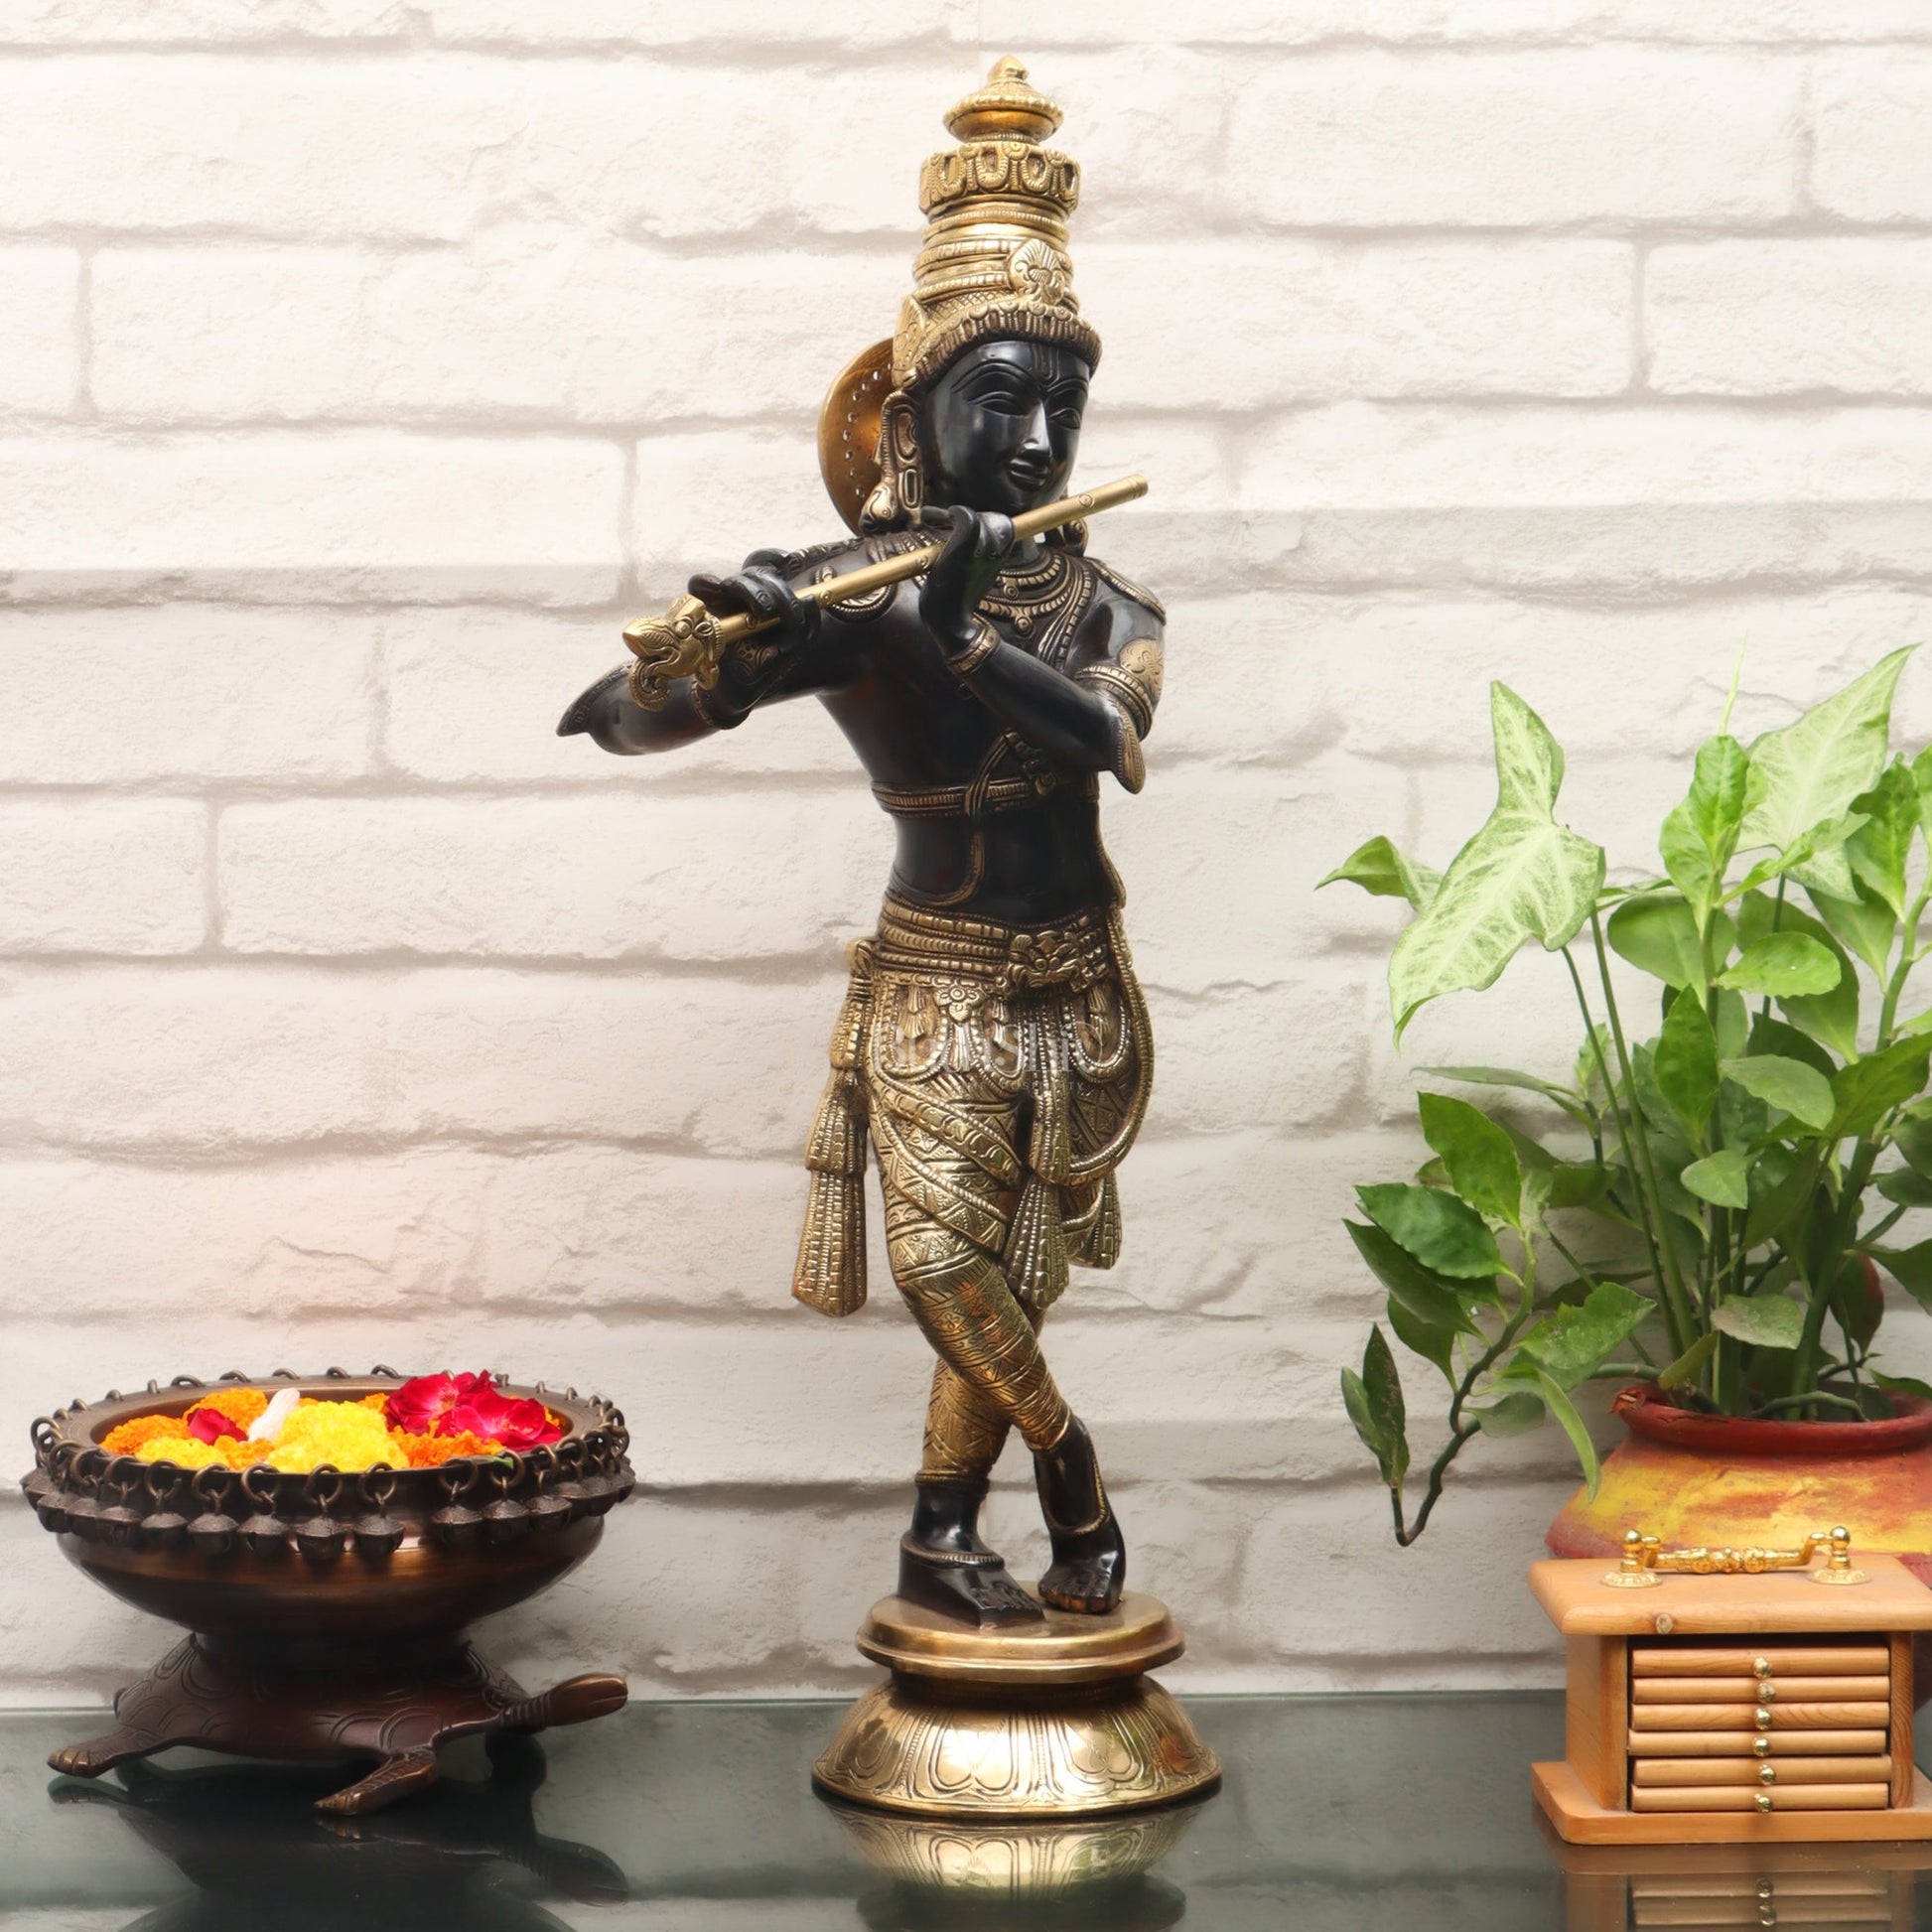 Superfine Brass Krishna Idol Black and Golden Finish | 23 Inch - Budhshiv.com